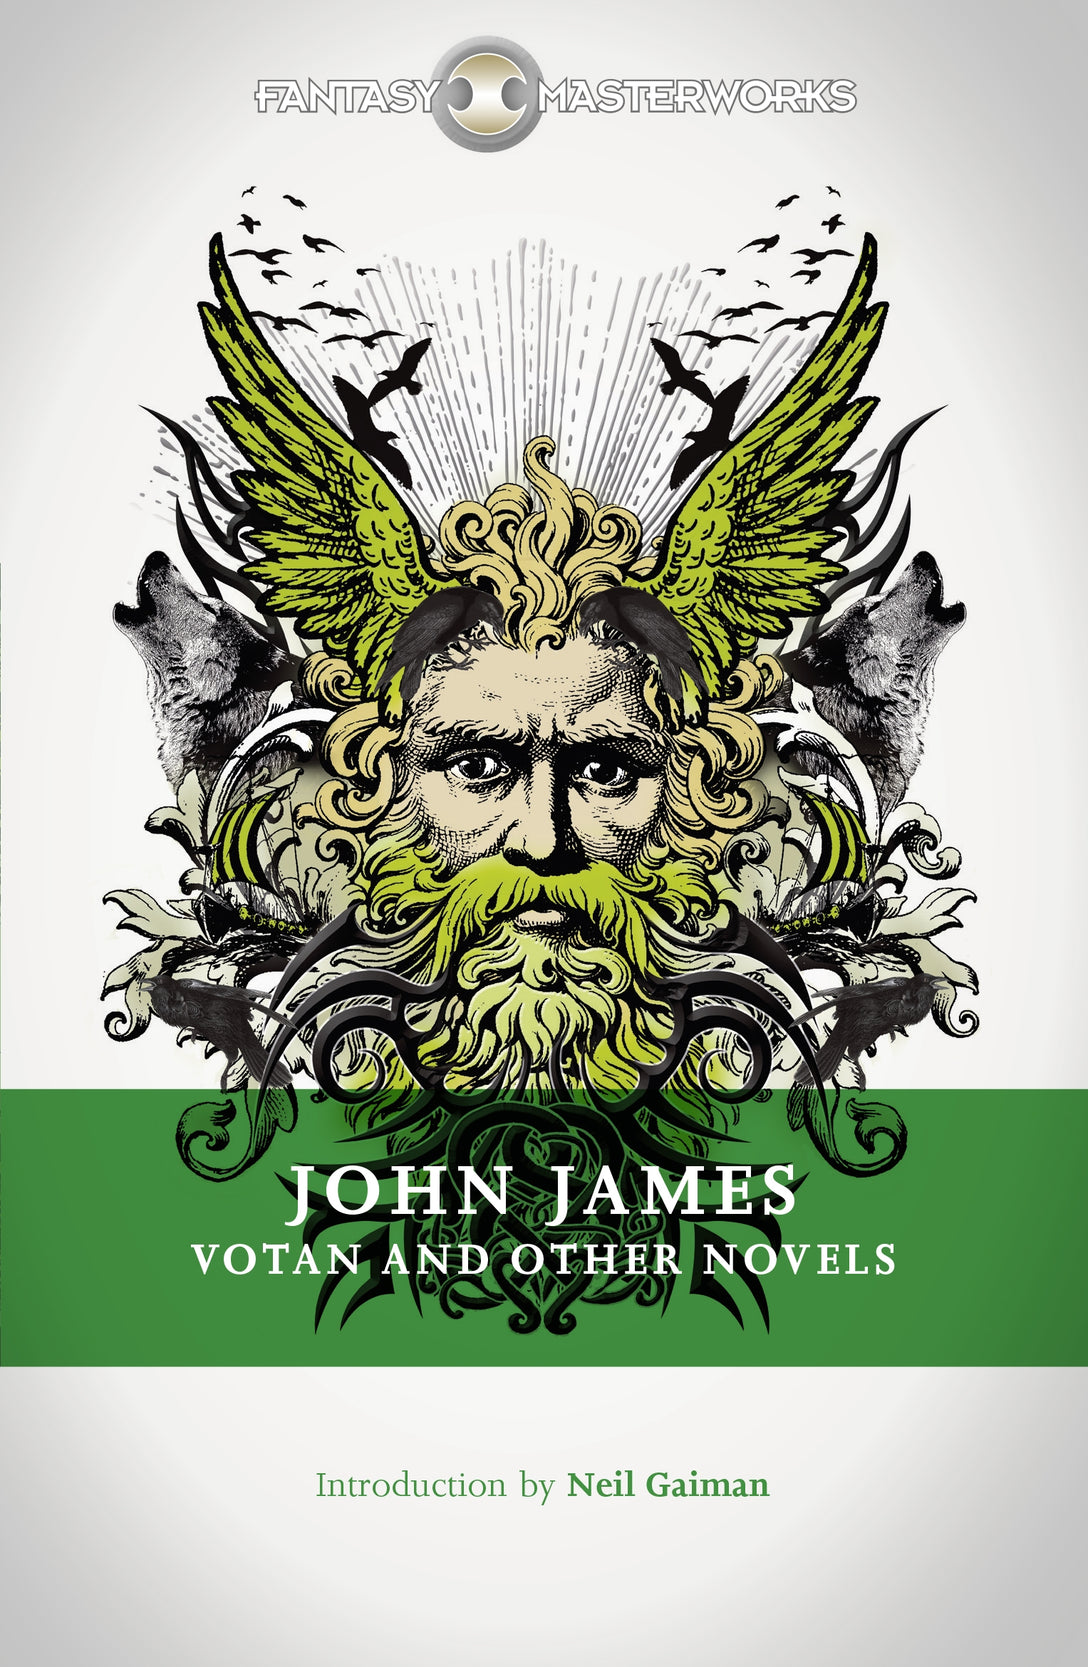 Votan and Other Novels by John James